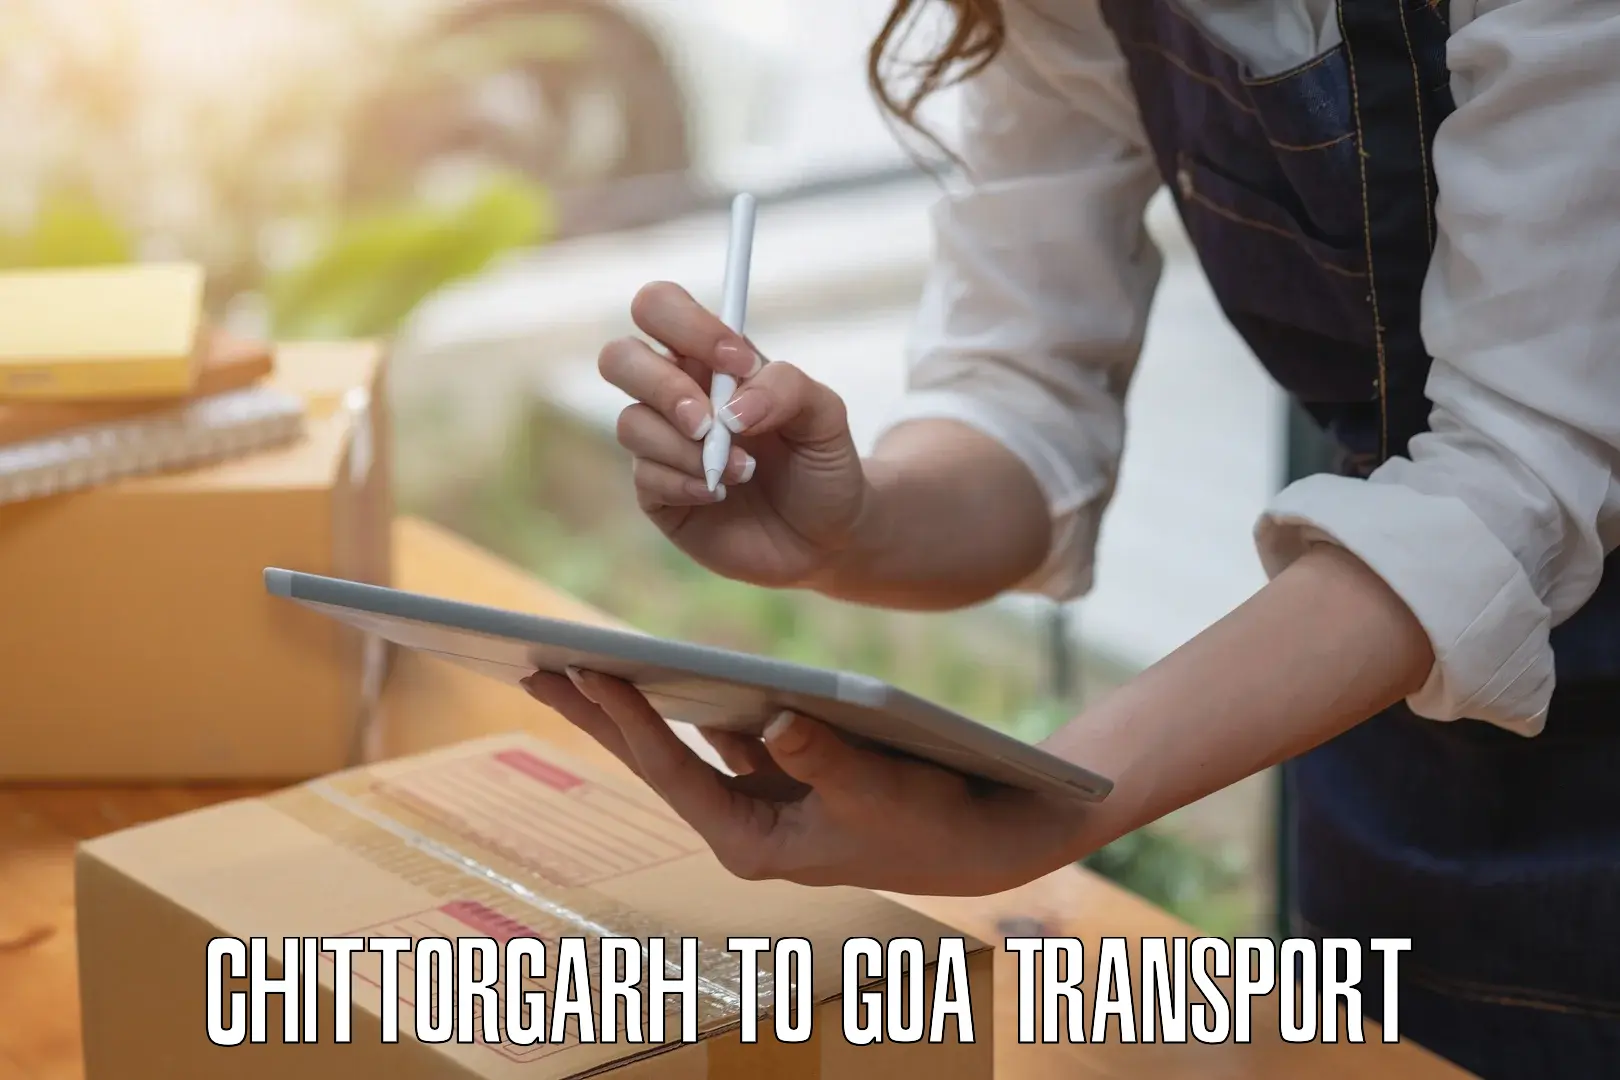 Transport in sharing Chittorgarh to Goa